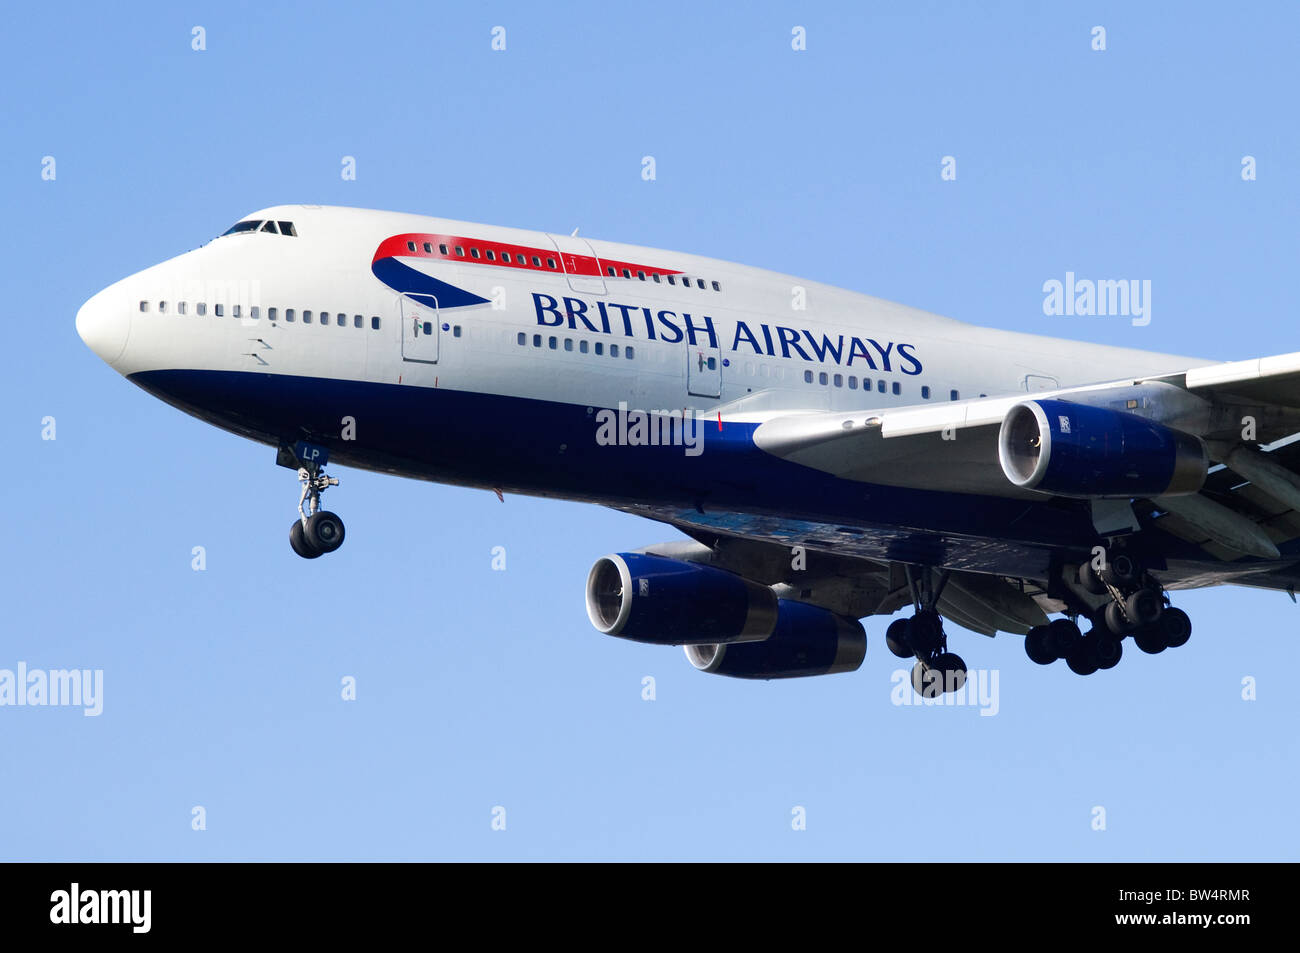 British Airways Boeing 747 Jumbo Jet on approach for landing at London Heathrow Airport Stock Photo